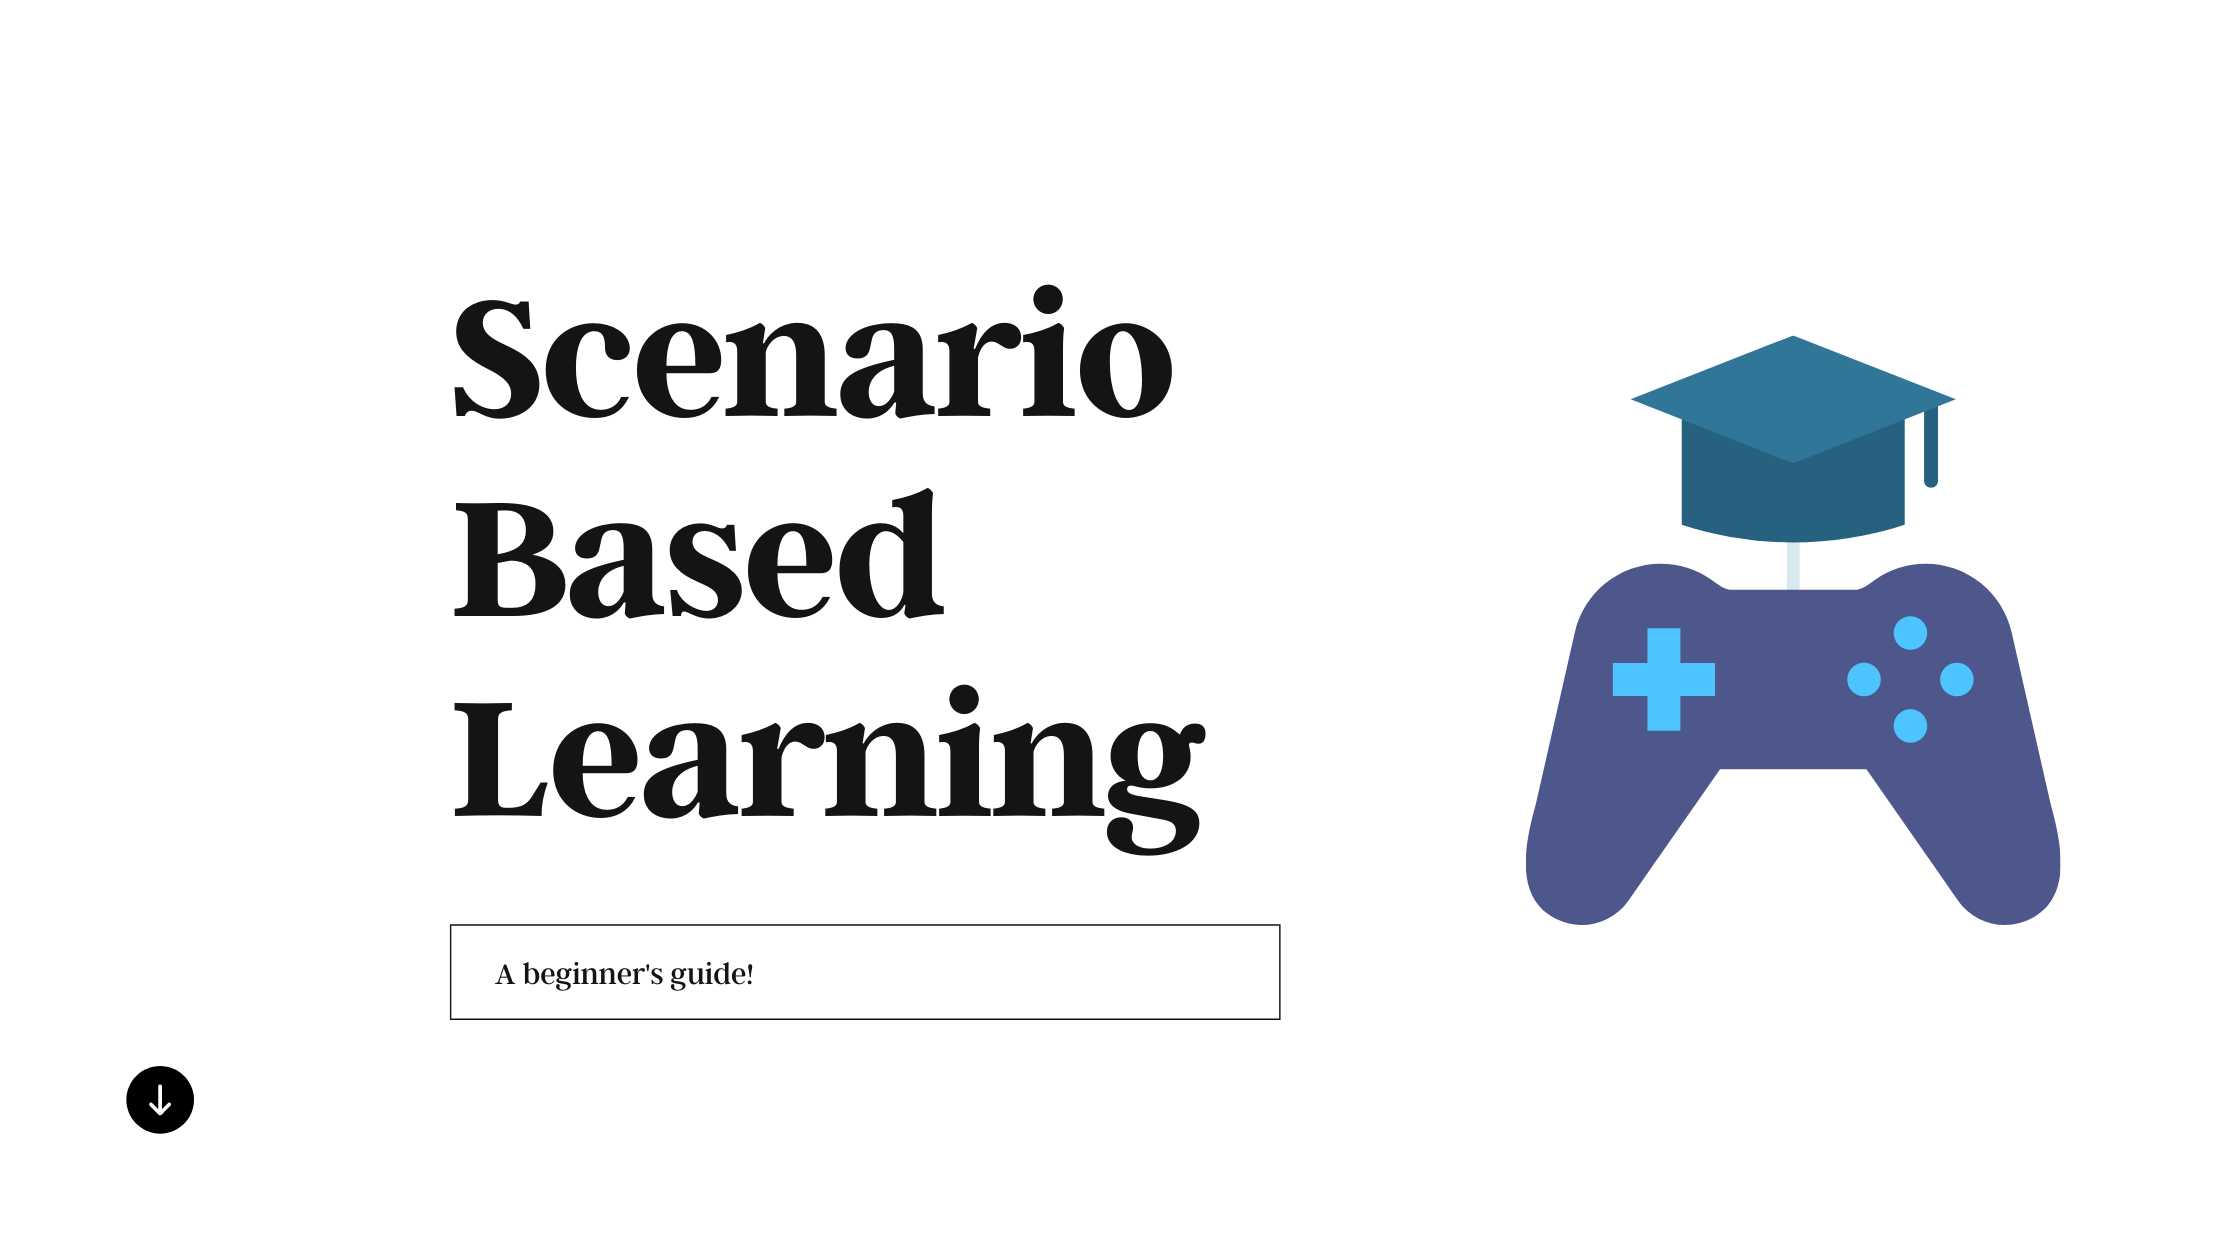 Scenario based learning